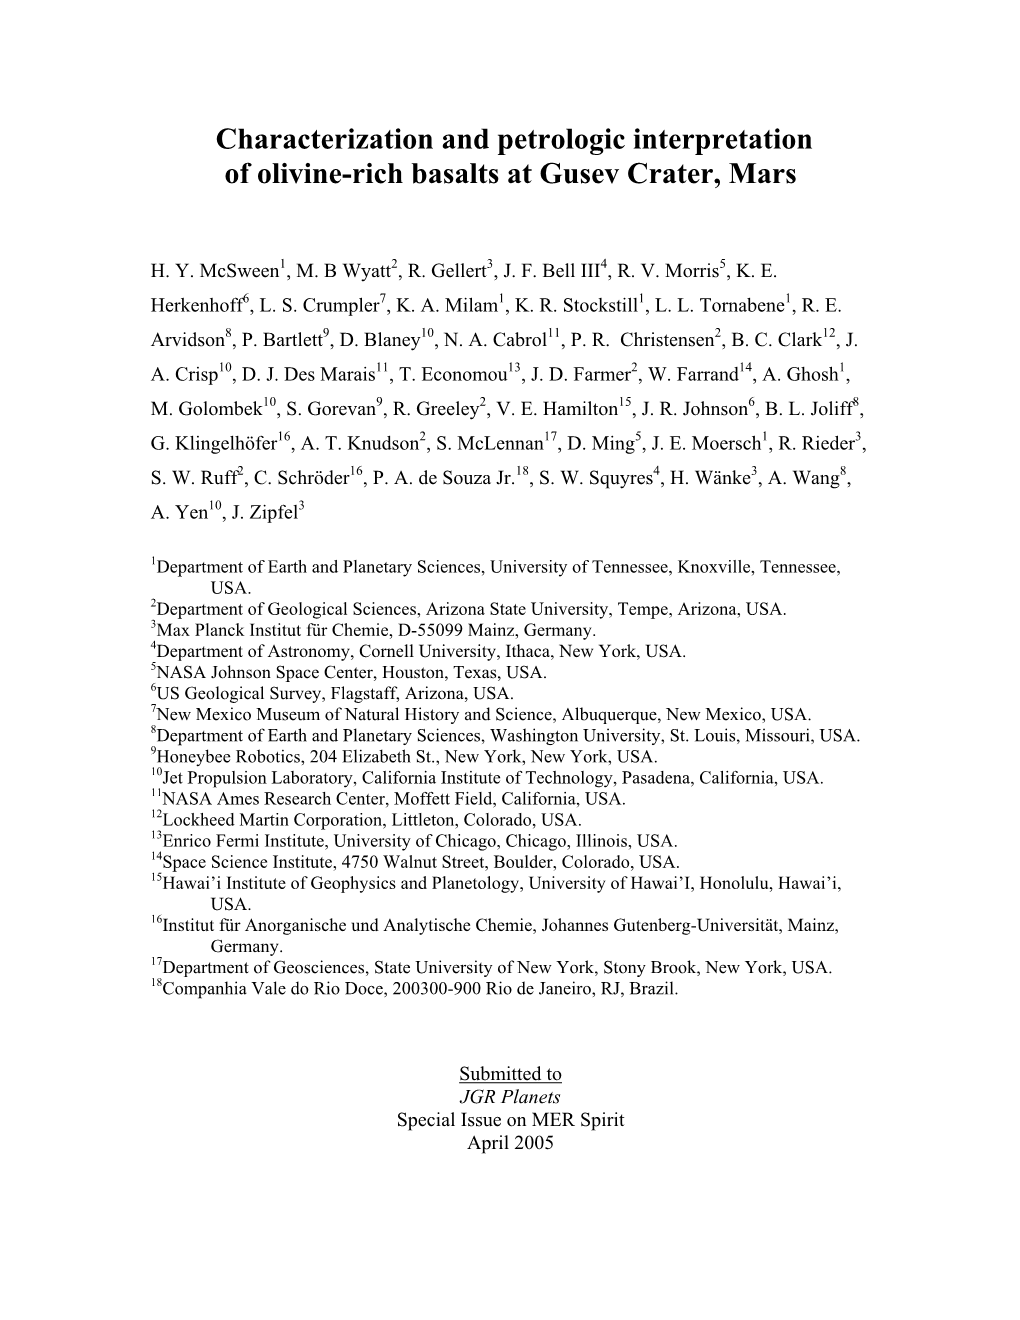 Characterization and Petrologic Interpretation of Olivine-Rich Basalts at Gusev Crater, Mars